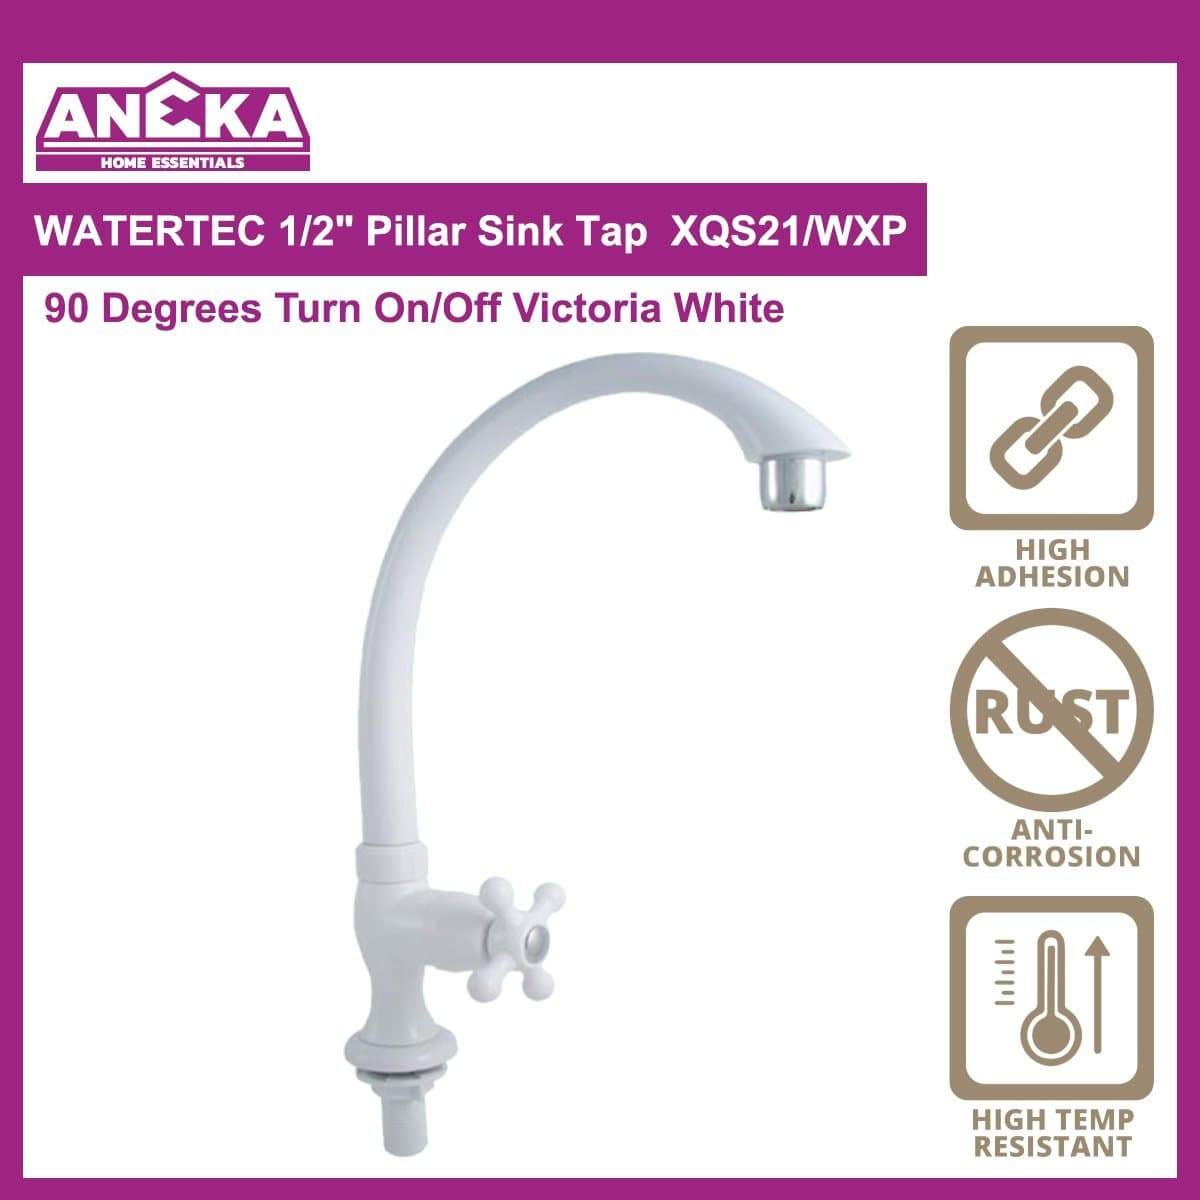 WATERTEC 1/2" Pillar Sink Tap XQS21/WXP